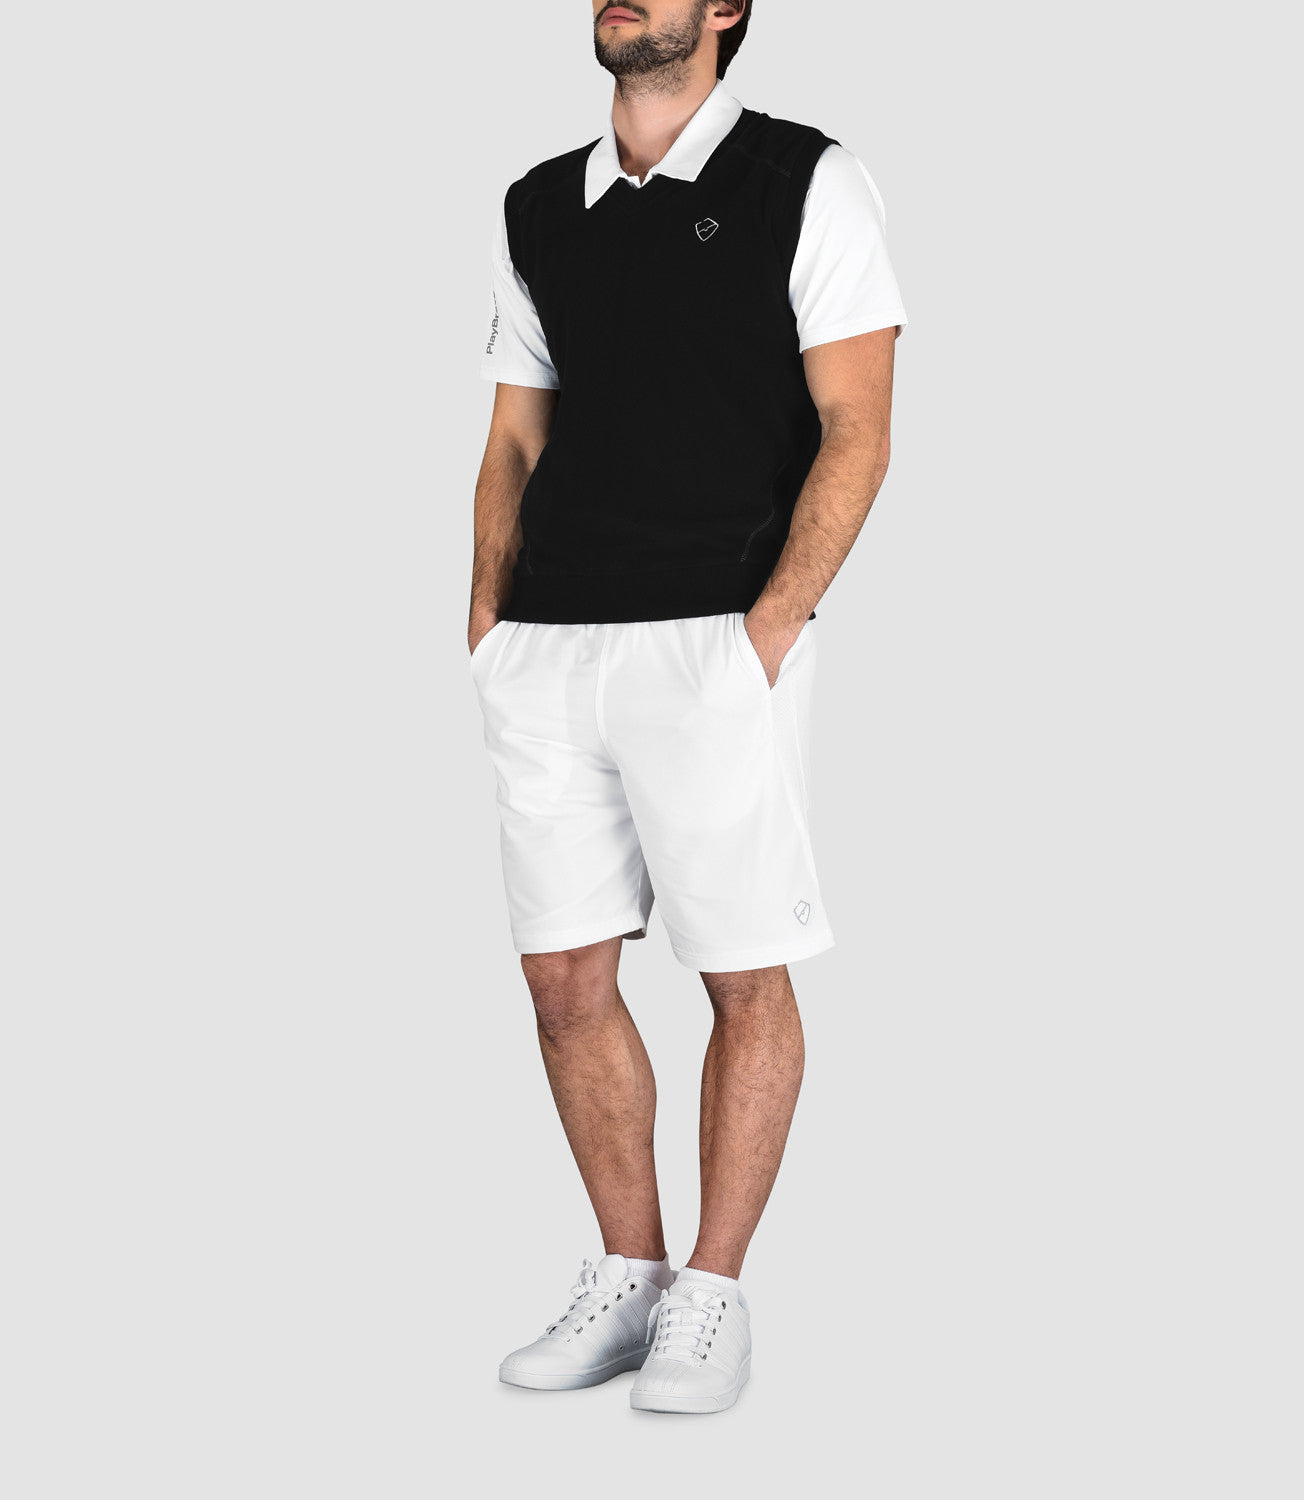 Fleece Jackets Tennis Men's Clothing -Max Fleece Tank-Black-S-PlayBrave Sports UK